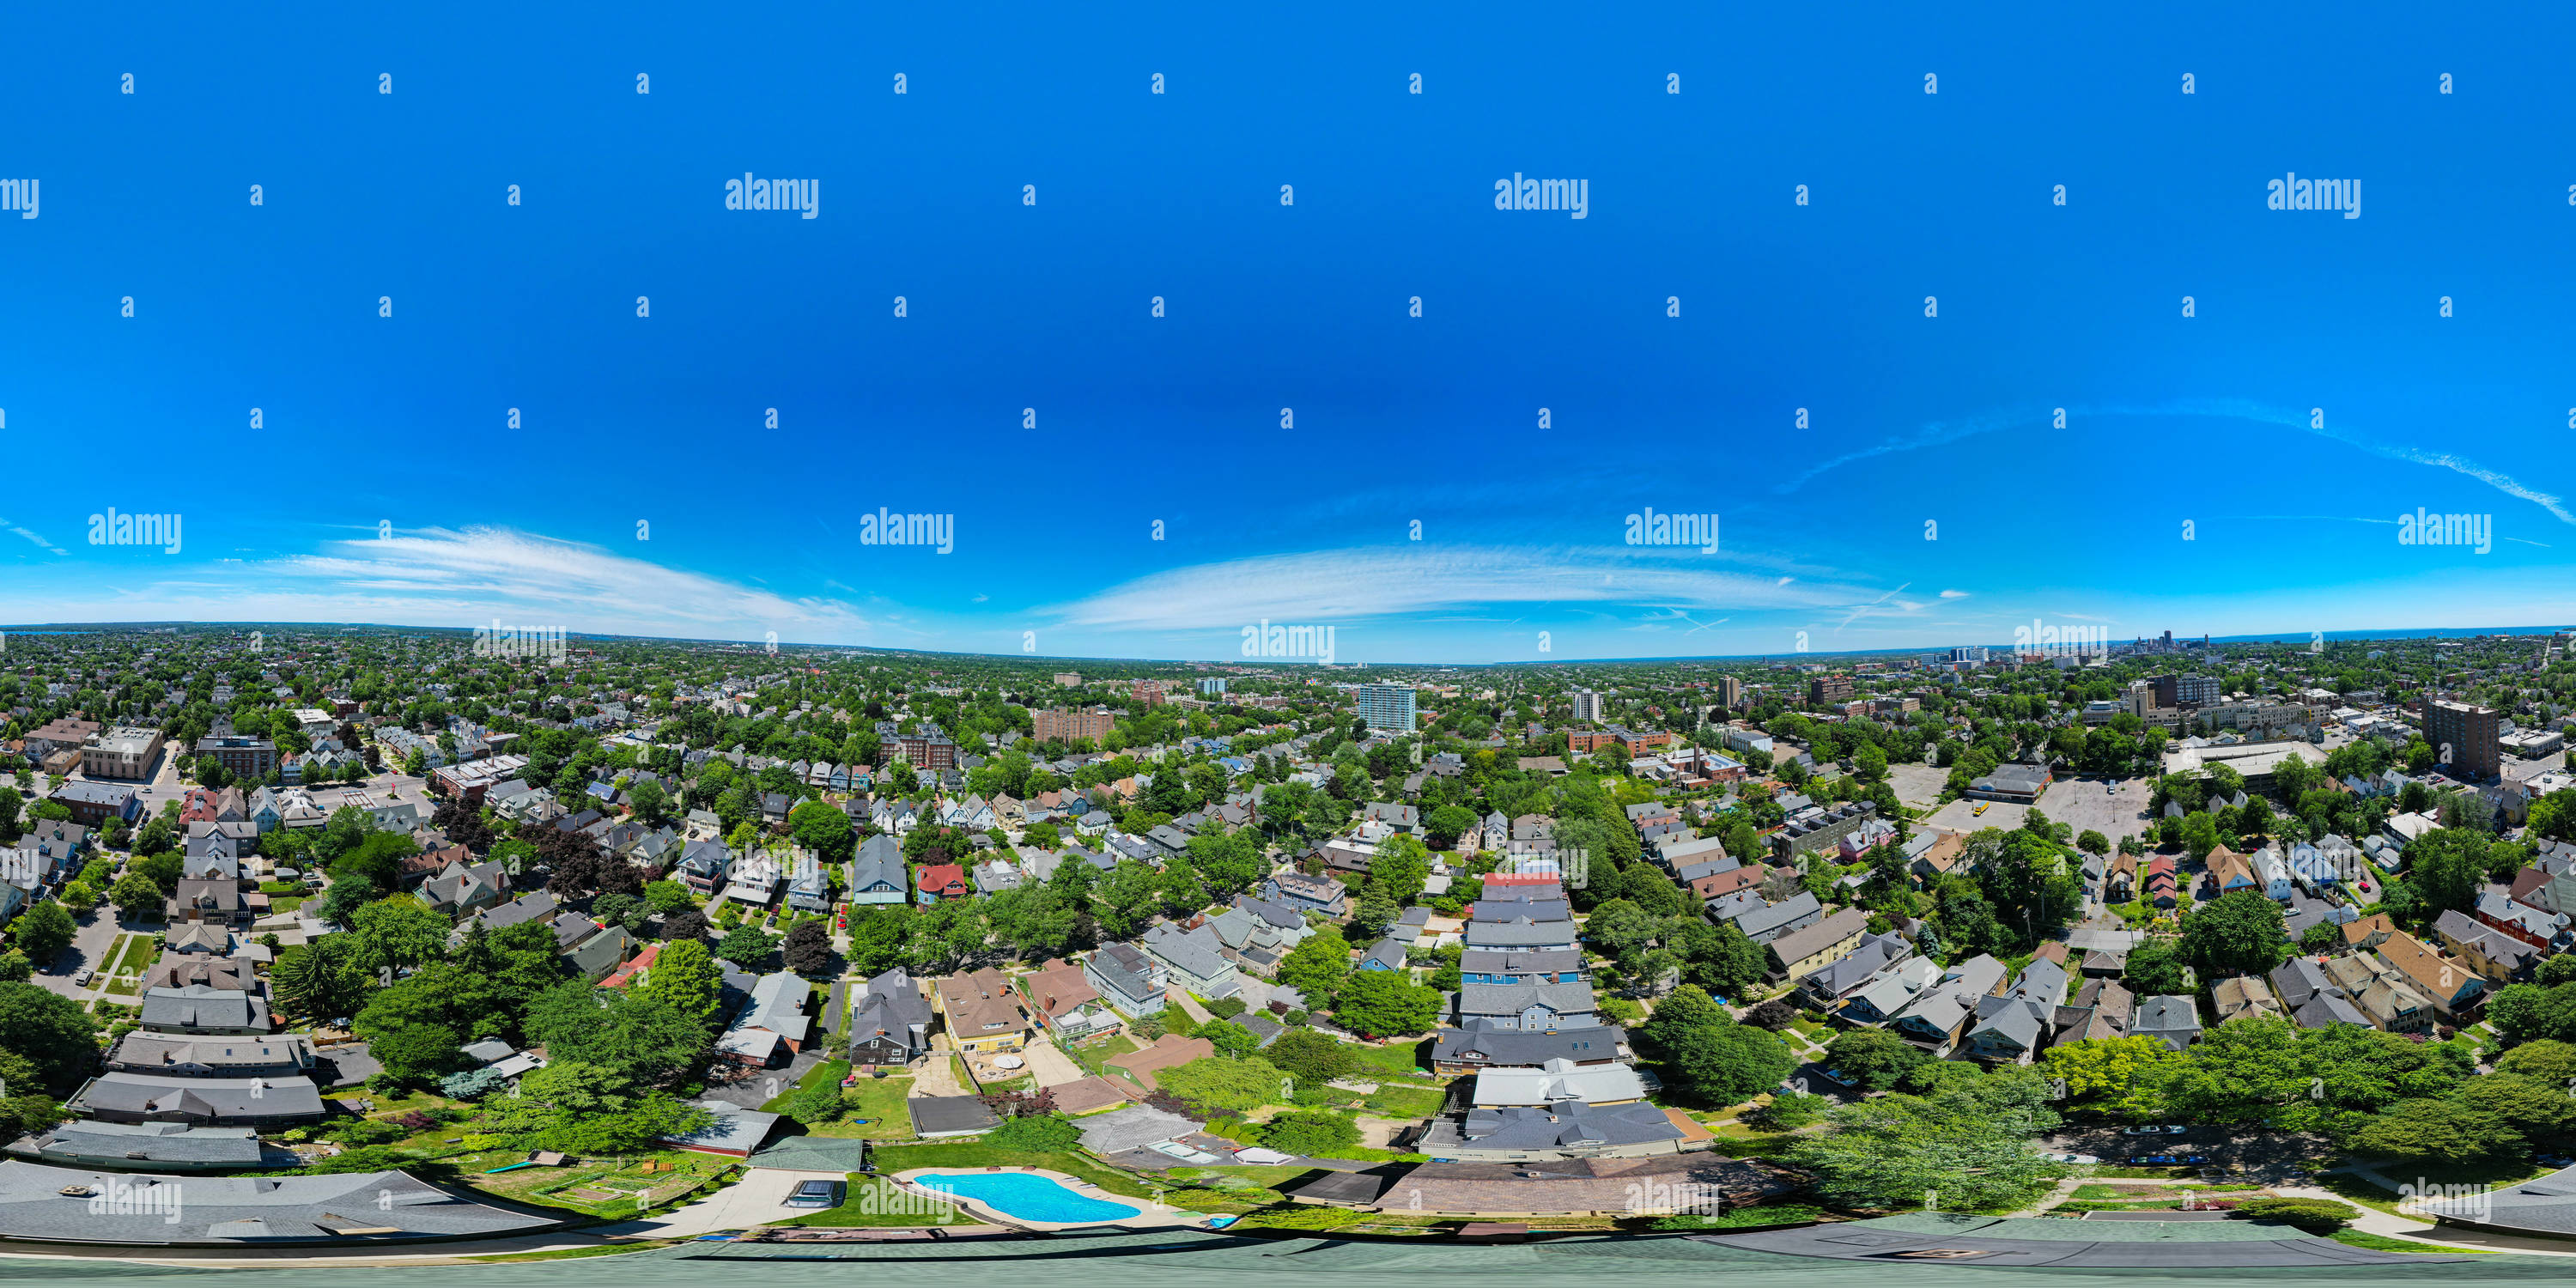 360 degree panoramic view of Downtown Buffalo, NY